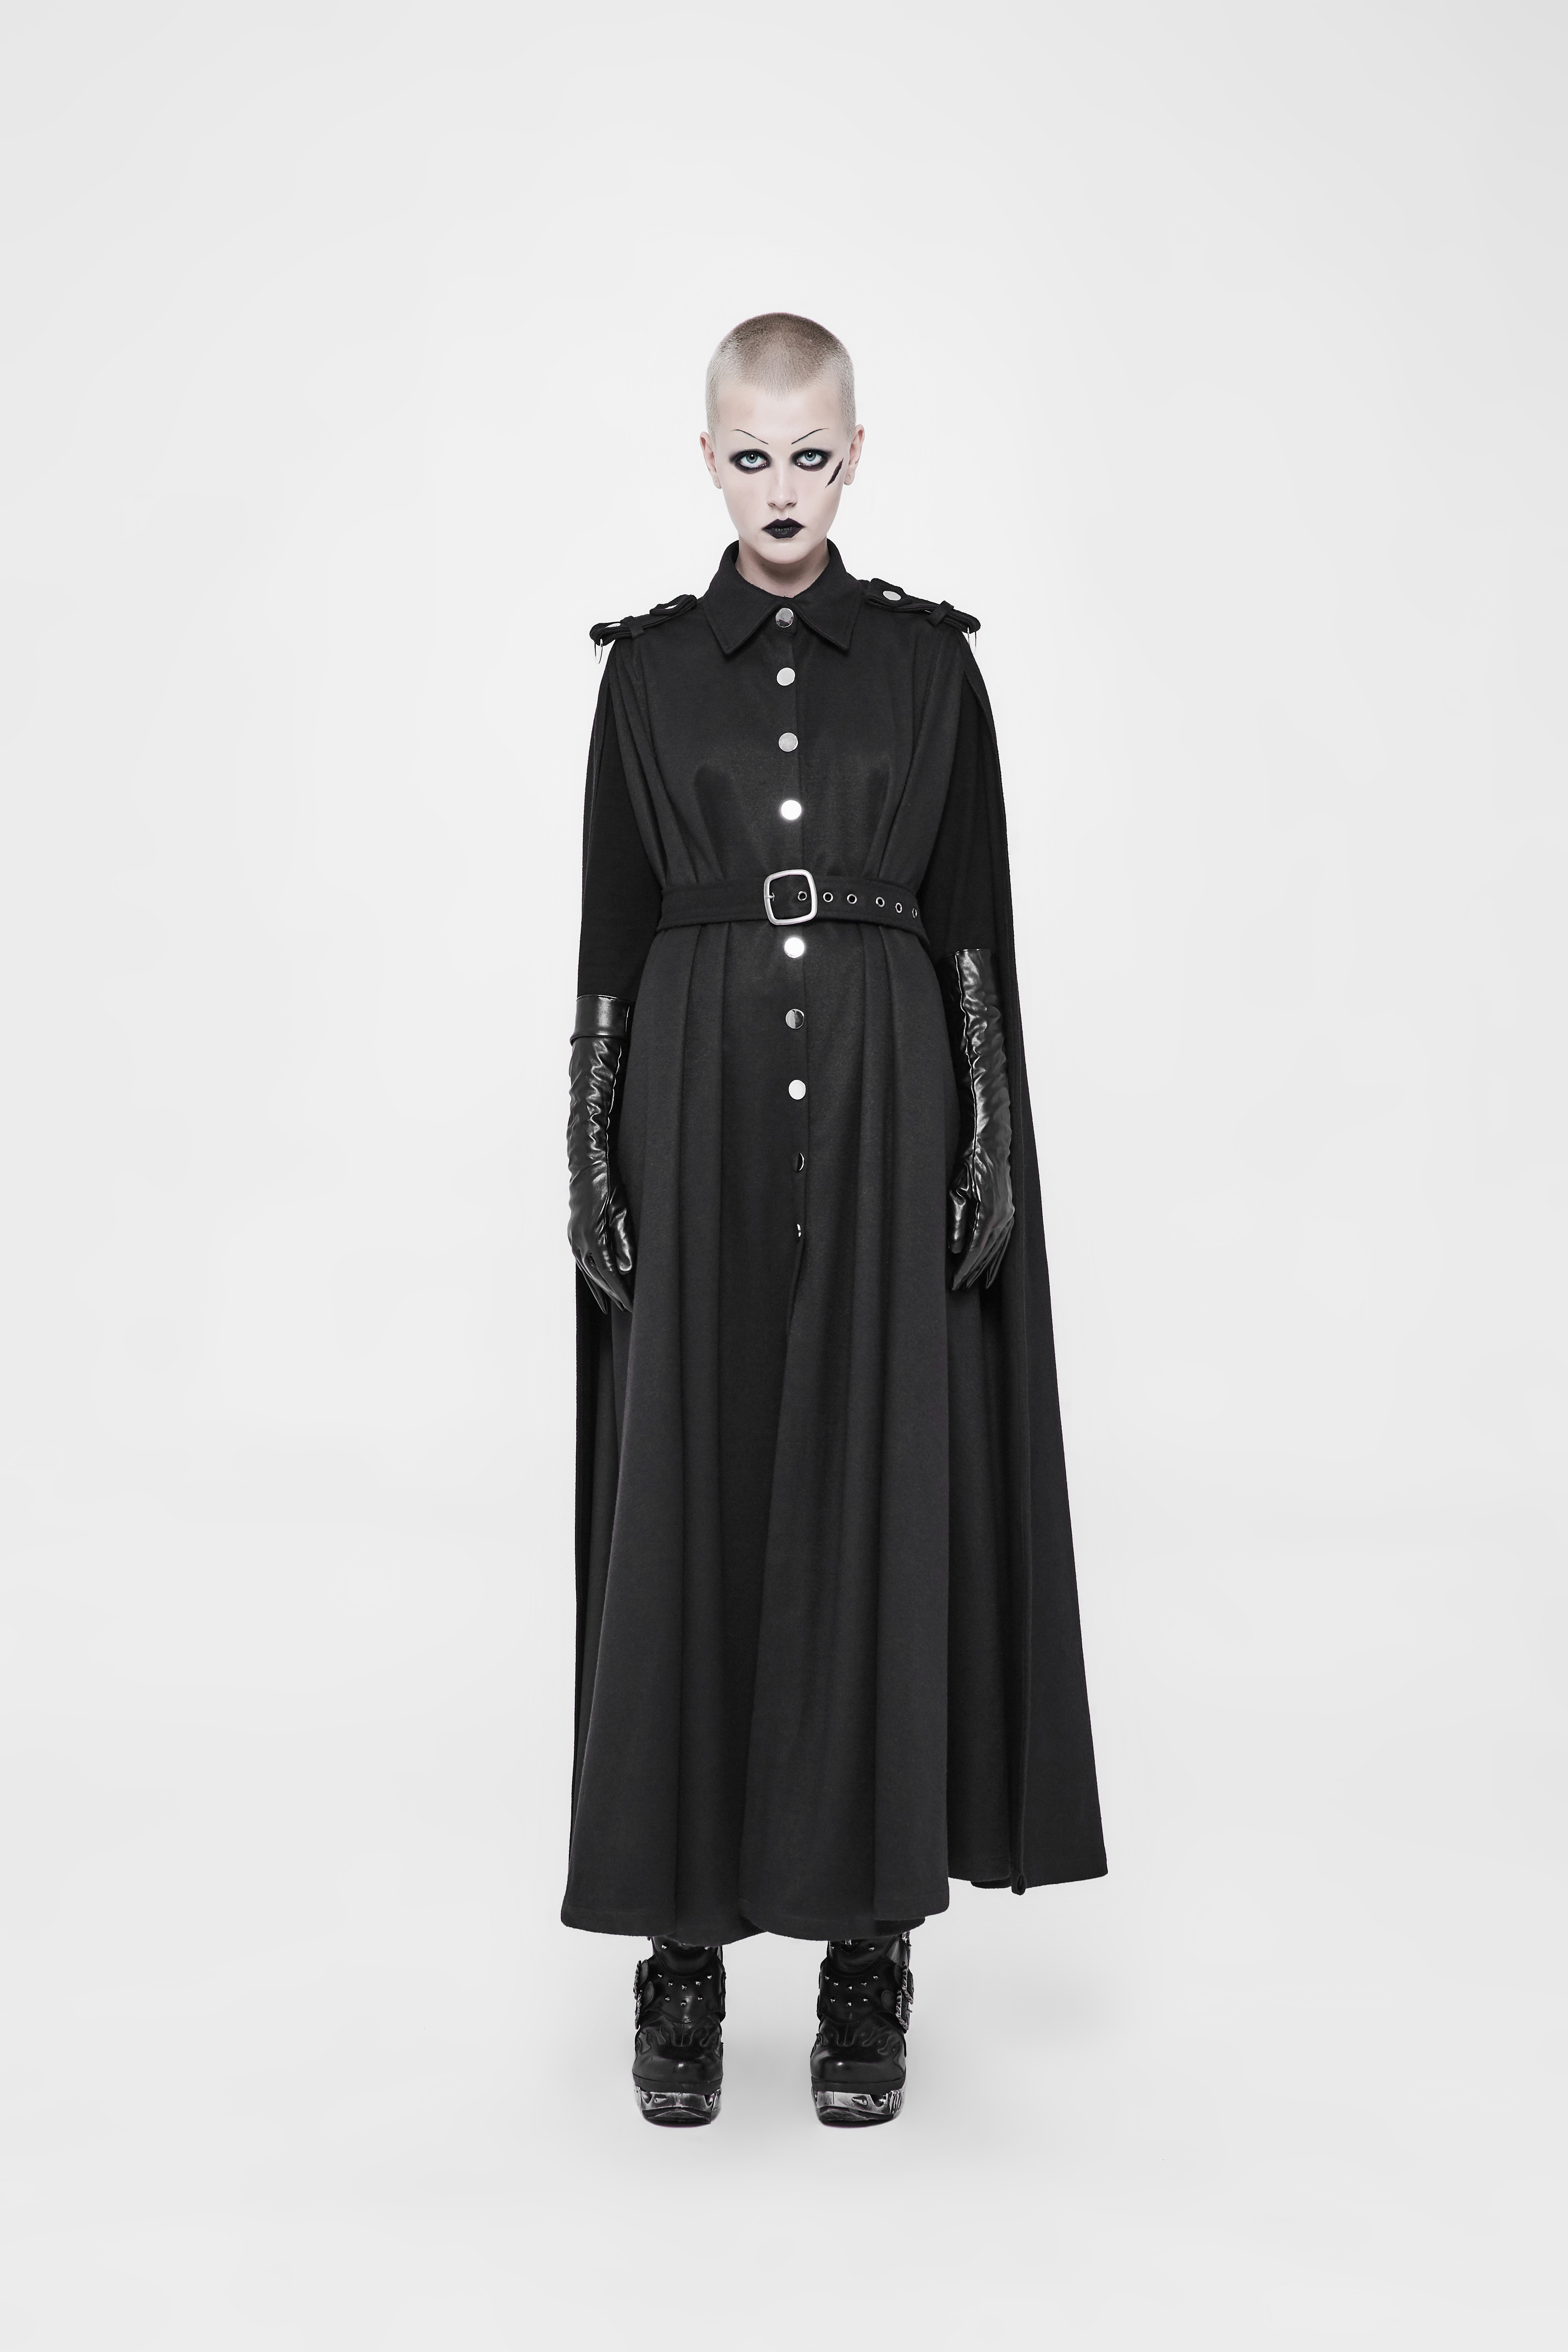 PUNKRAVE Two Wear Long Military Uniform women wizard cosplay cape coat ...